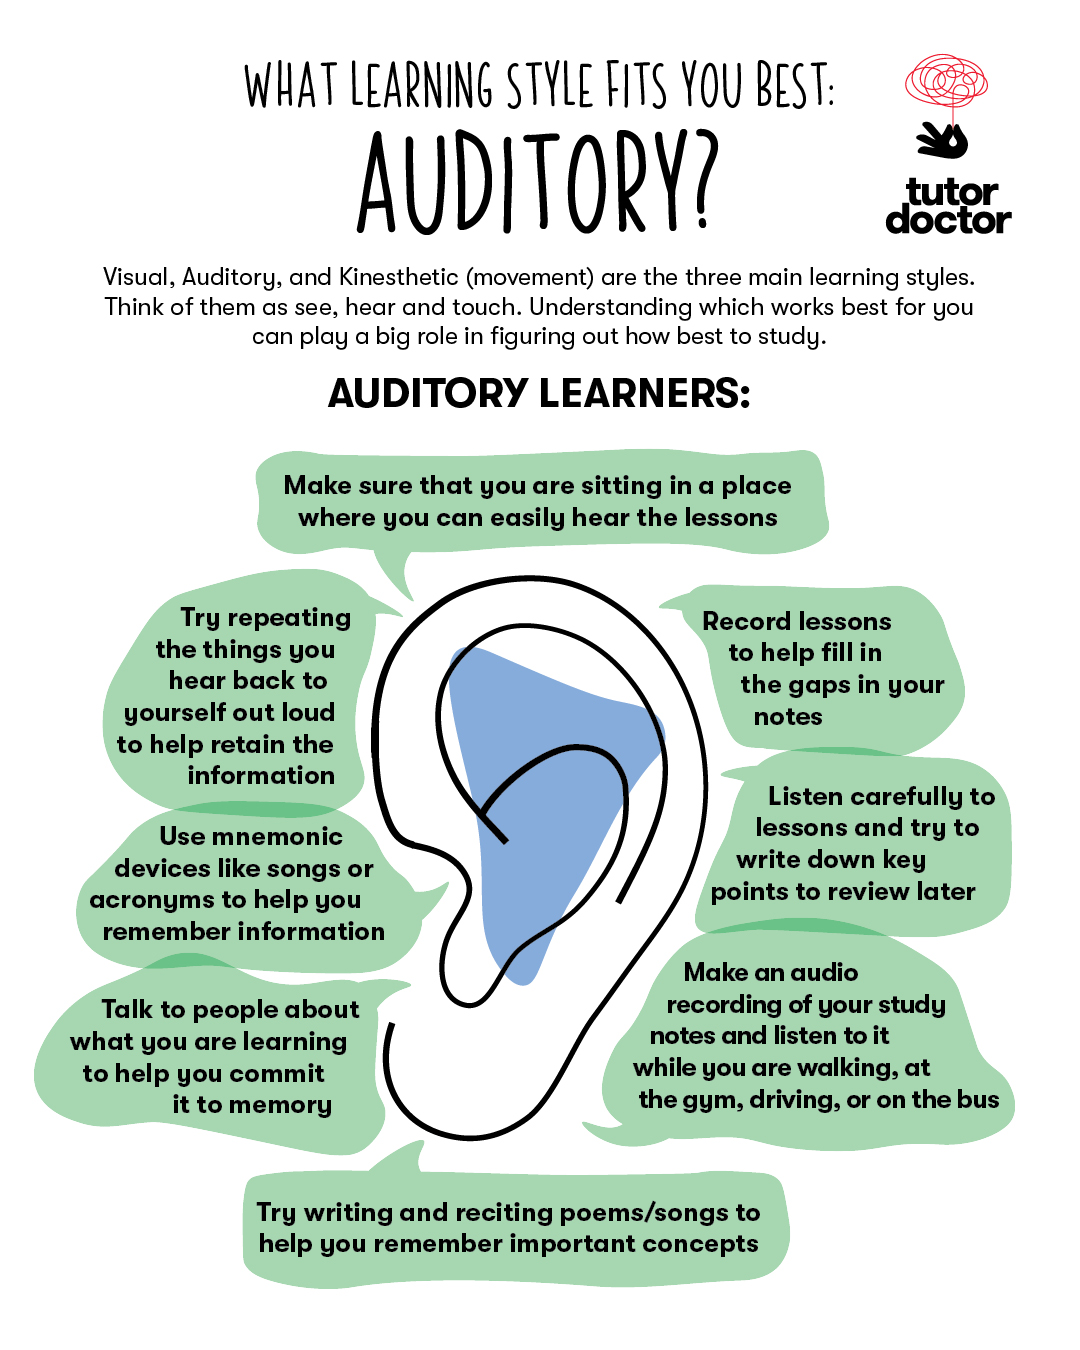 auditory learning style characteristics